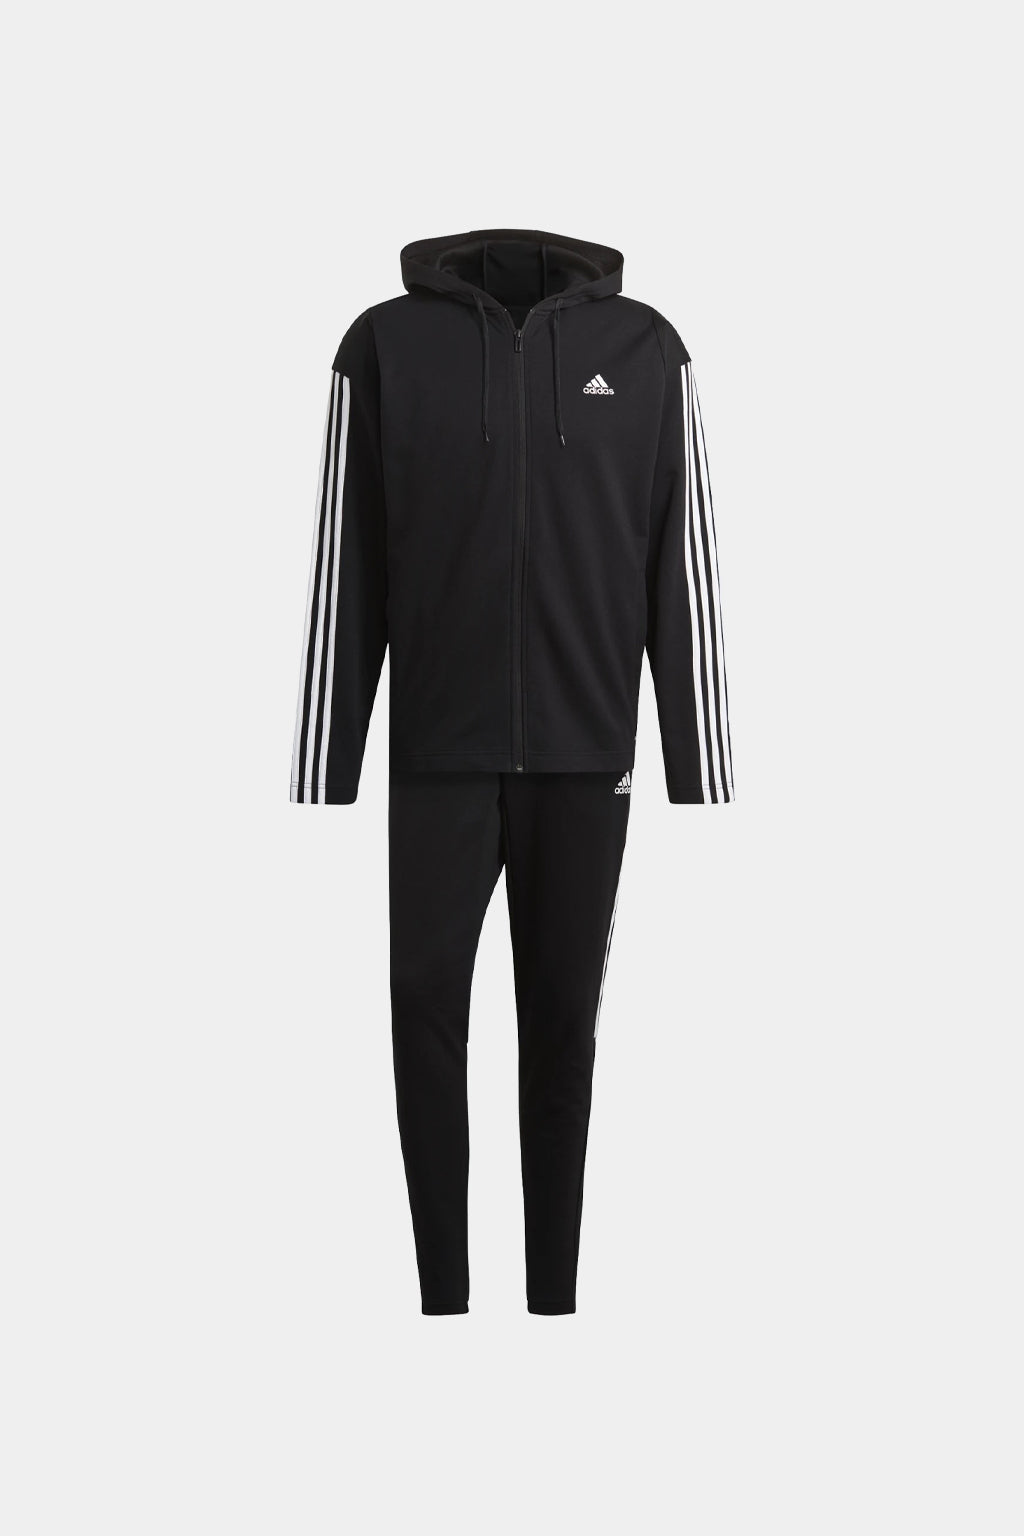 Adidas - Sportswear Ribbed Insert Track Suit